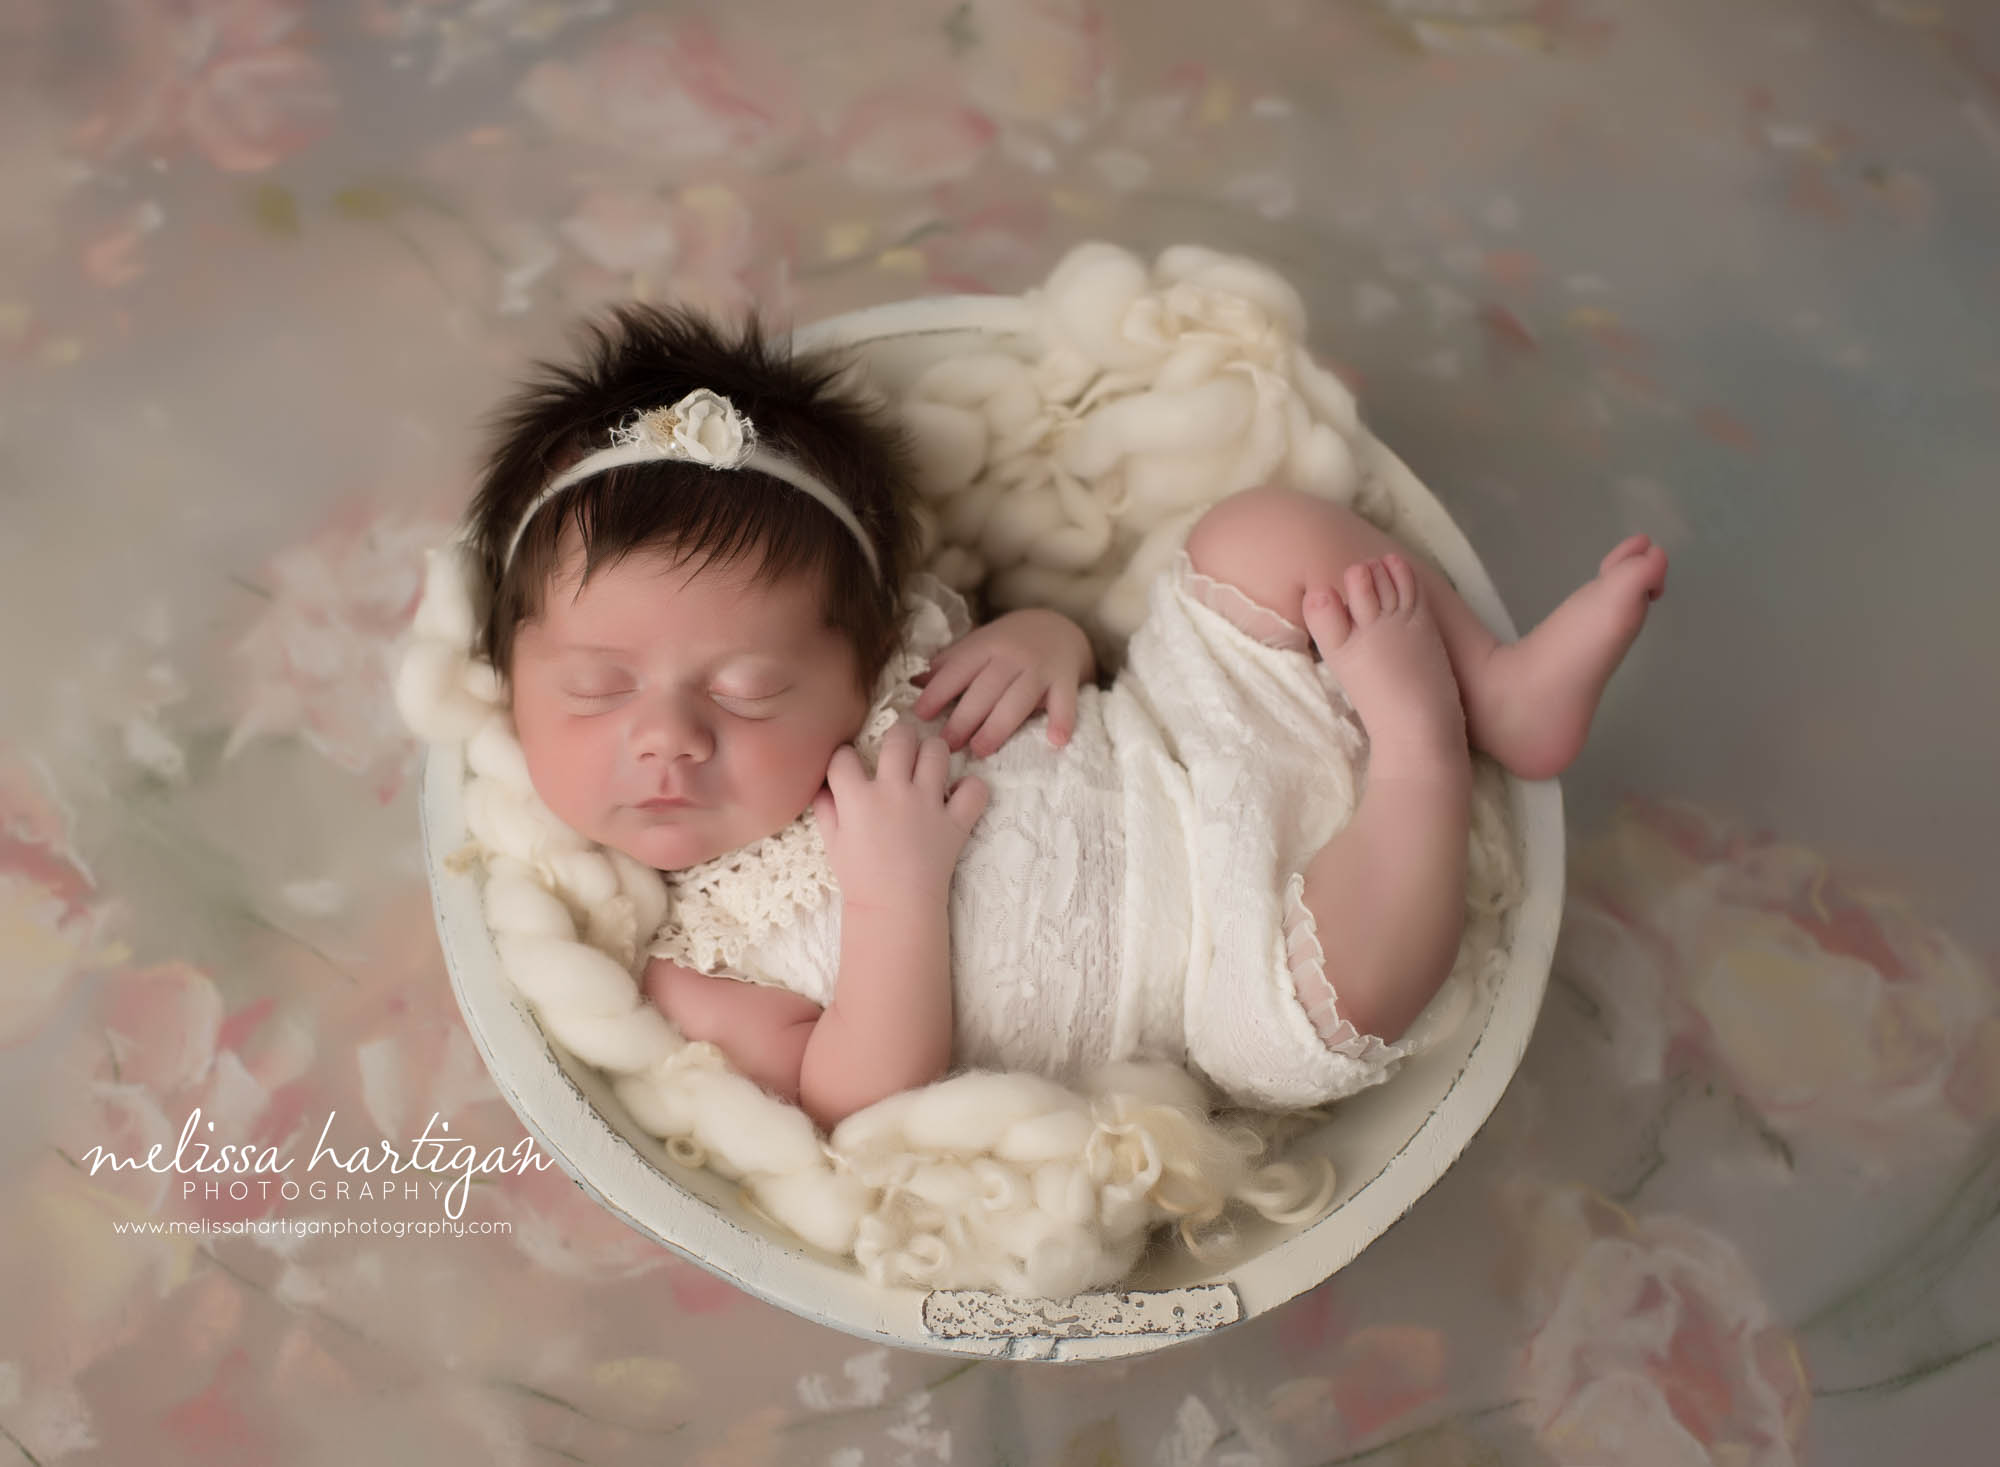 newborn baby girl posed in cream wooden bowl wearing cream newborn baby outfit